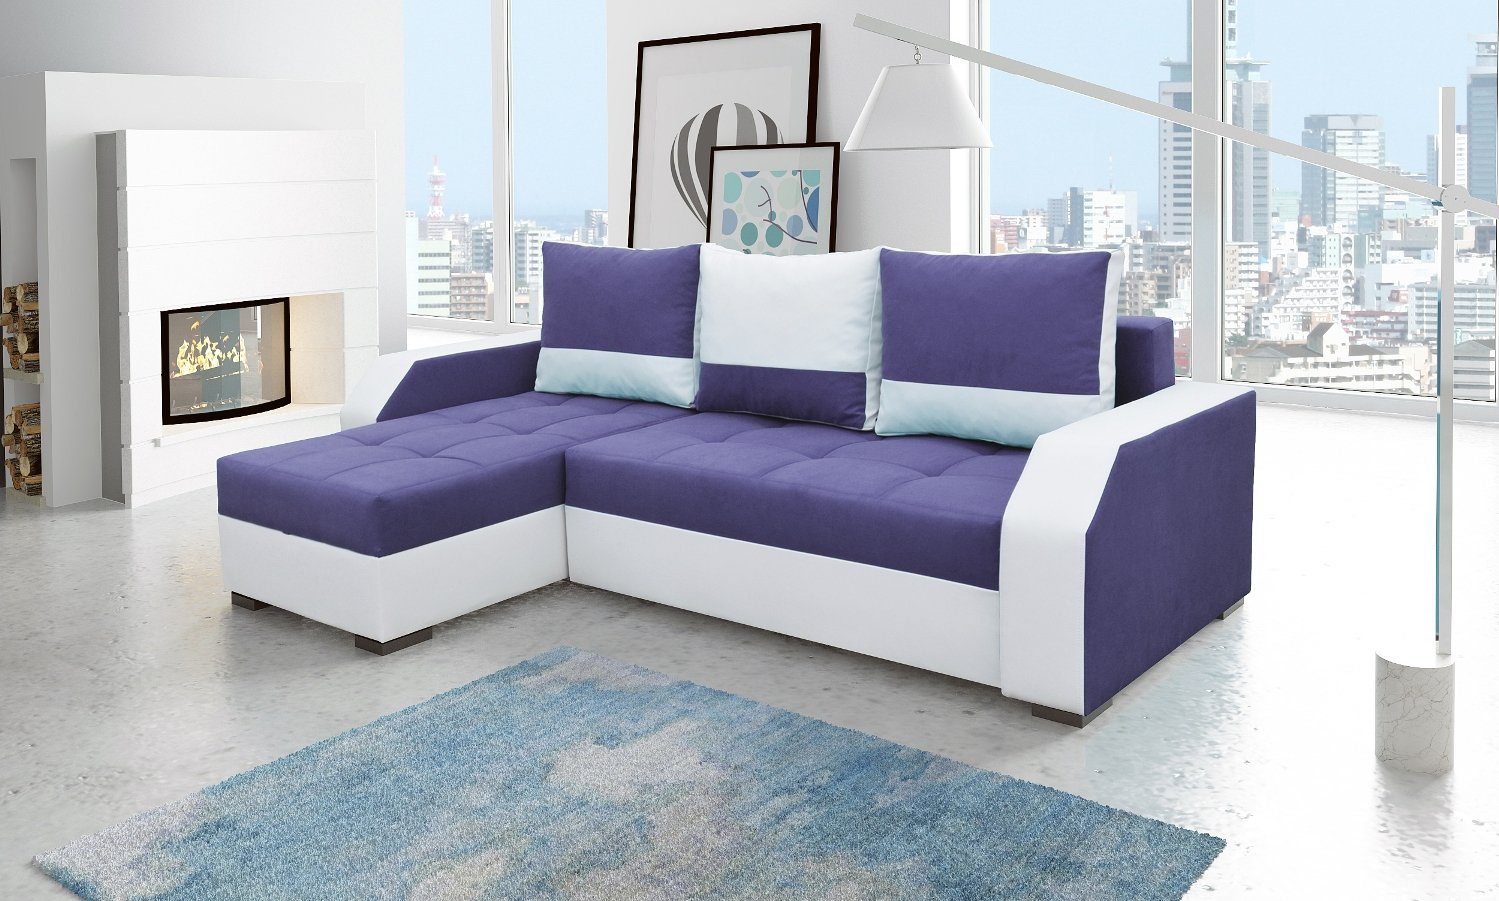 JVmoebel Ecksofa, Design Ecksofa Bettfunktion Couch Leder Textil Polster Sofas Couchen Lila / Weiß